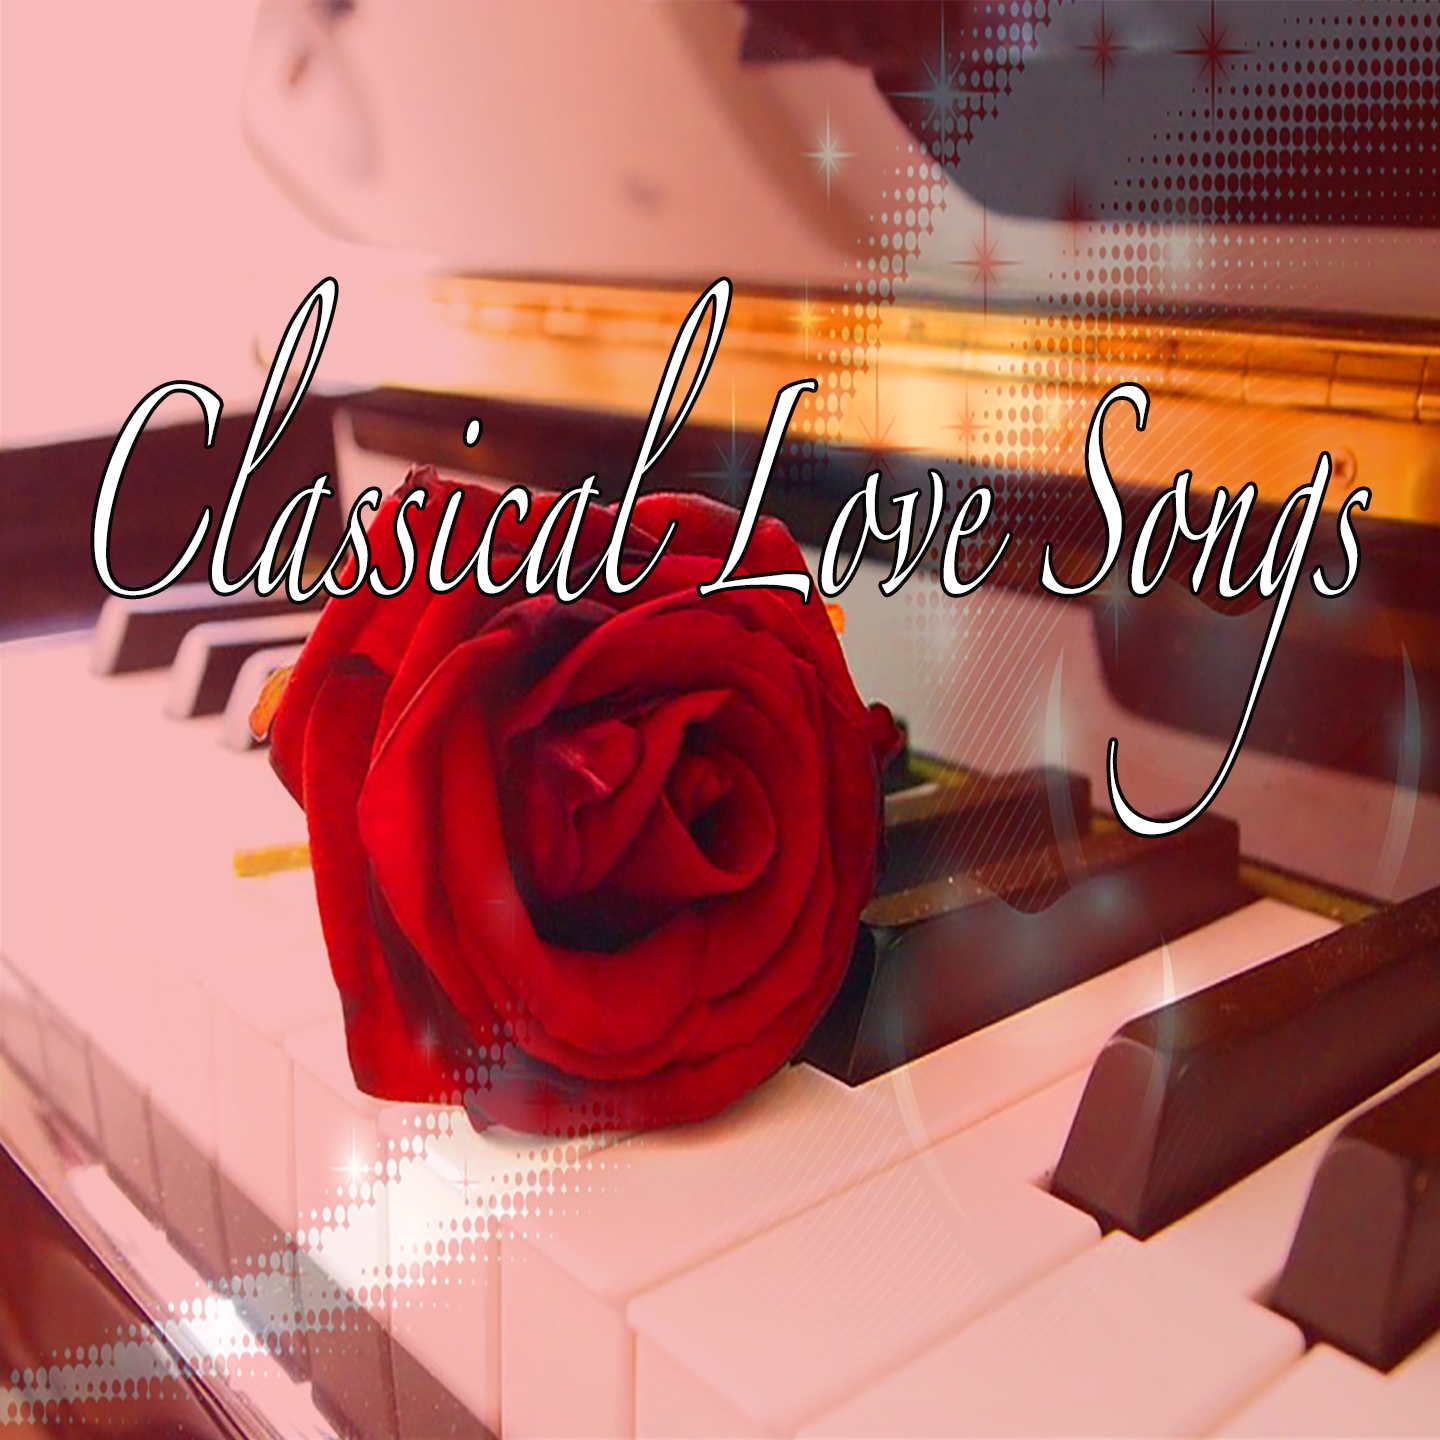 Classical Love Music